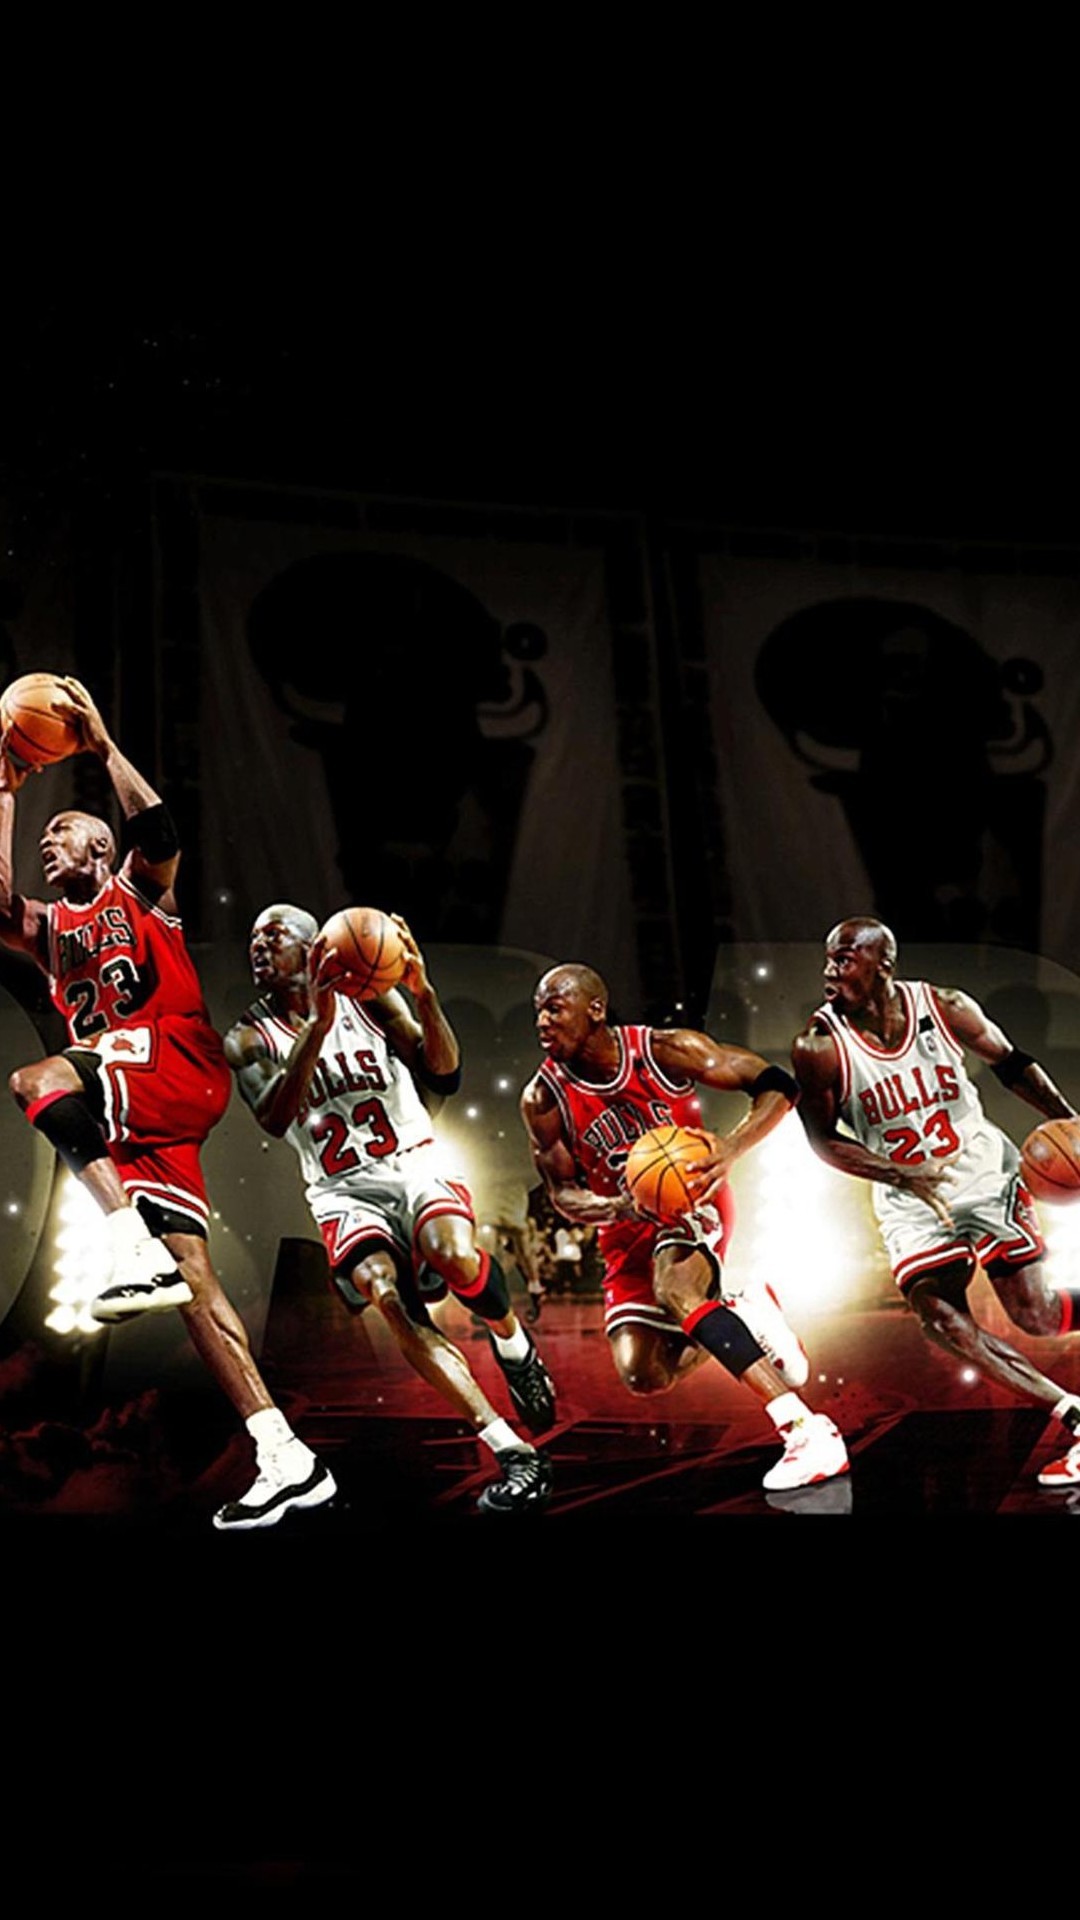 Michael Jordan Live Wallpaper (67+ images)1080 x 1920